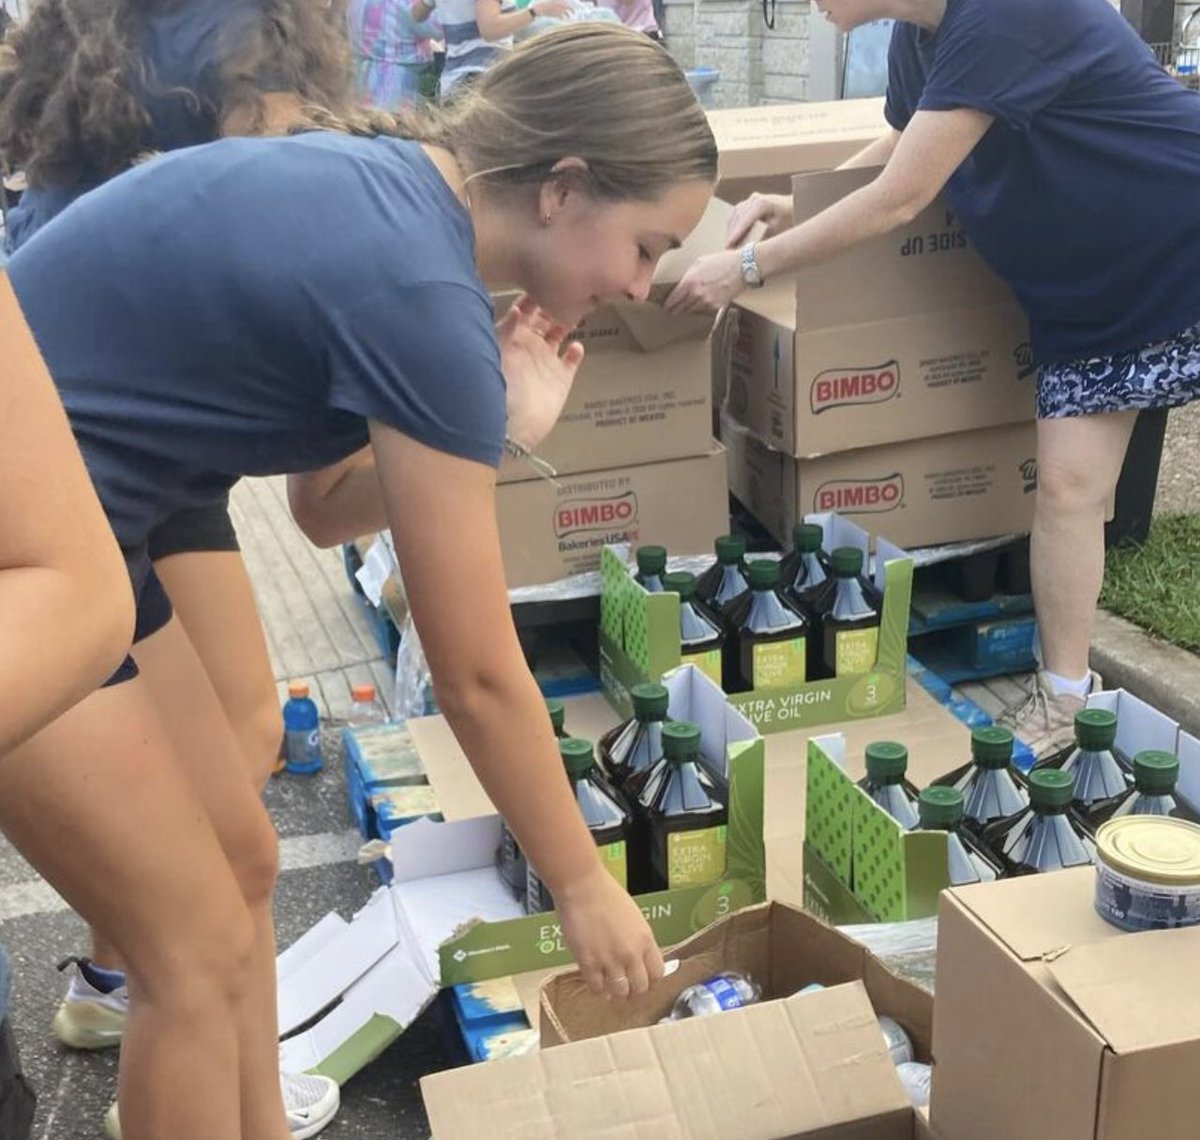 Houston-Memorial, TX, 2026 girls blue group helped out at a local food bank! 👏 👏 👏
.
.
.
#teenvolunteering #teensgivingback #makingadifference #foodbank #lionsheartstrong